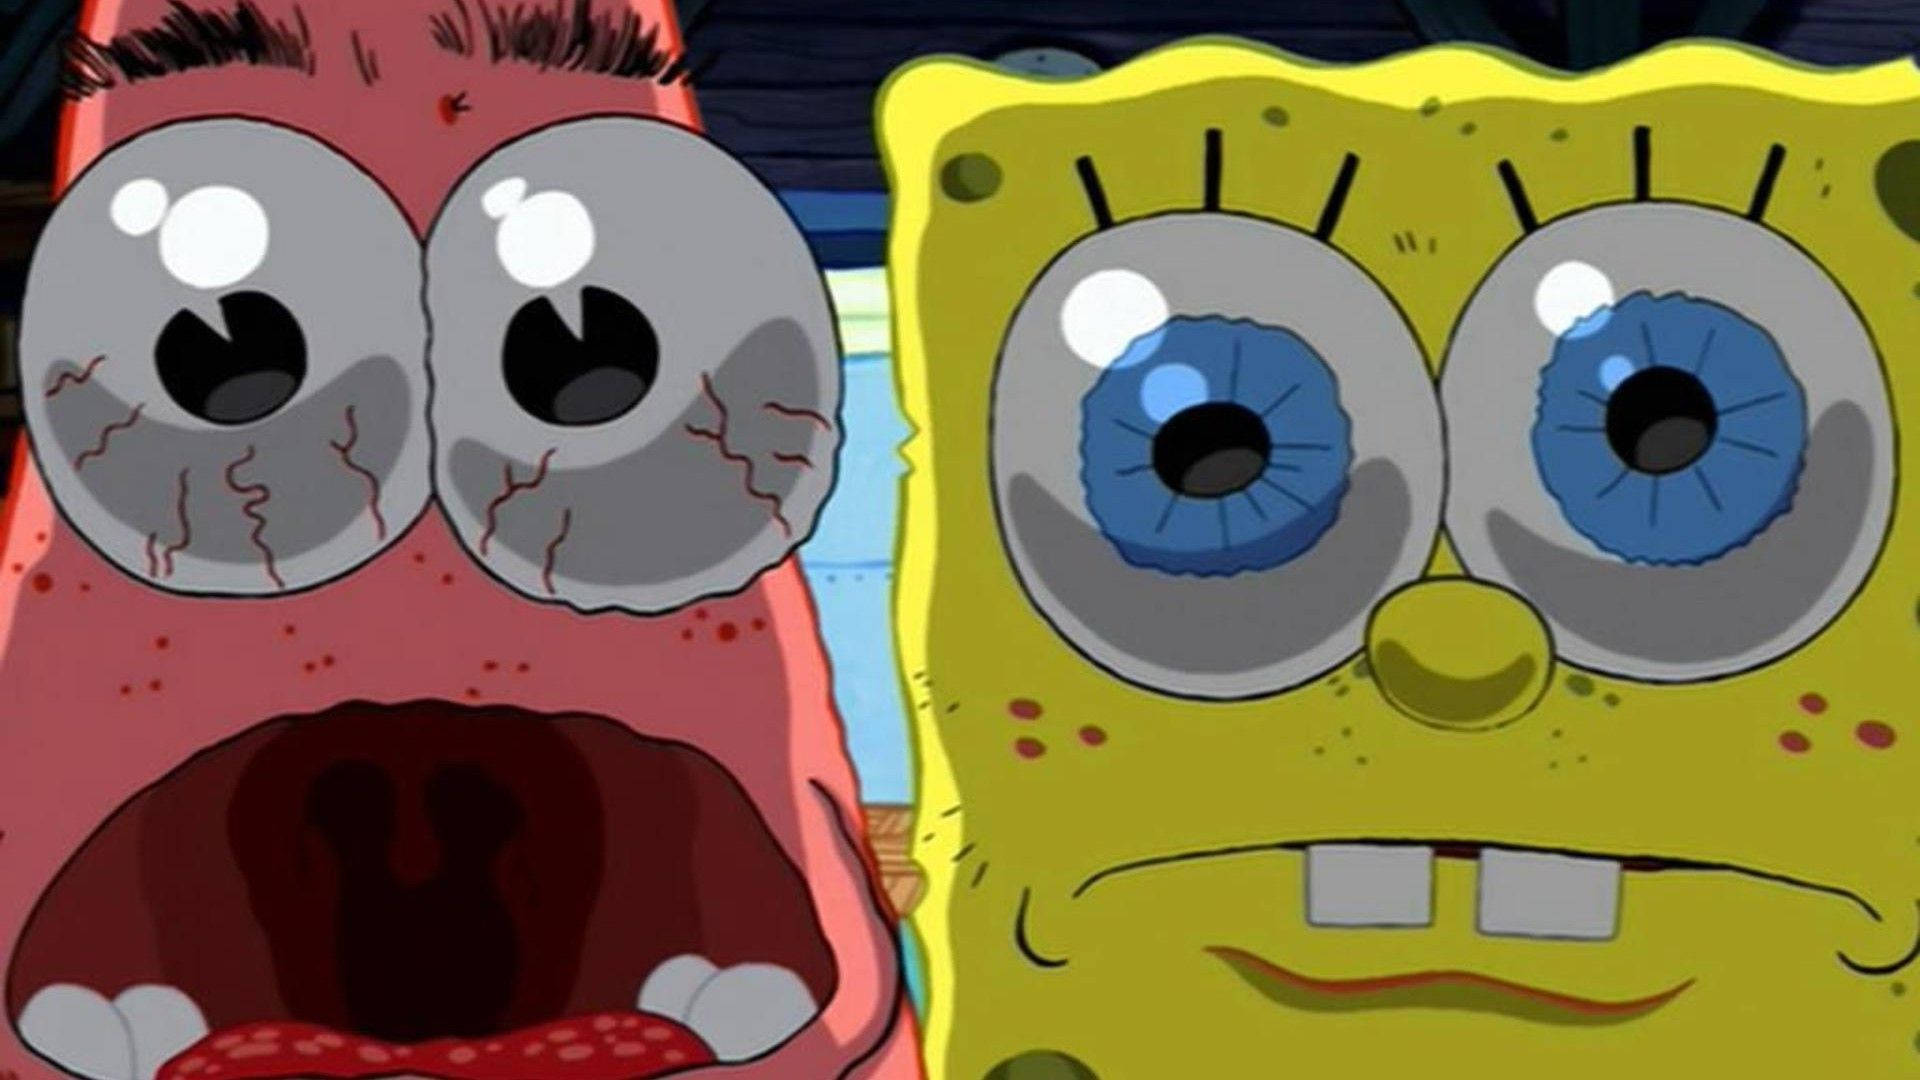 spongebob shocked face